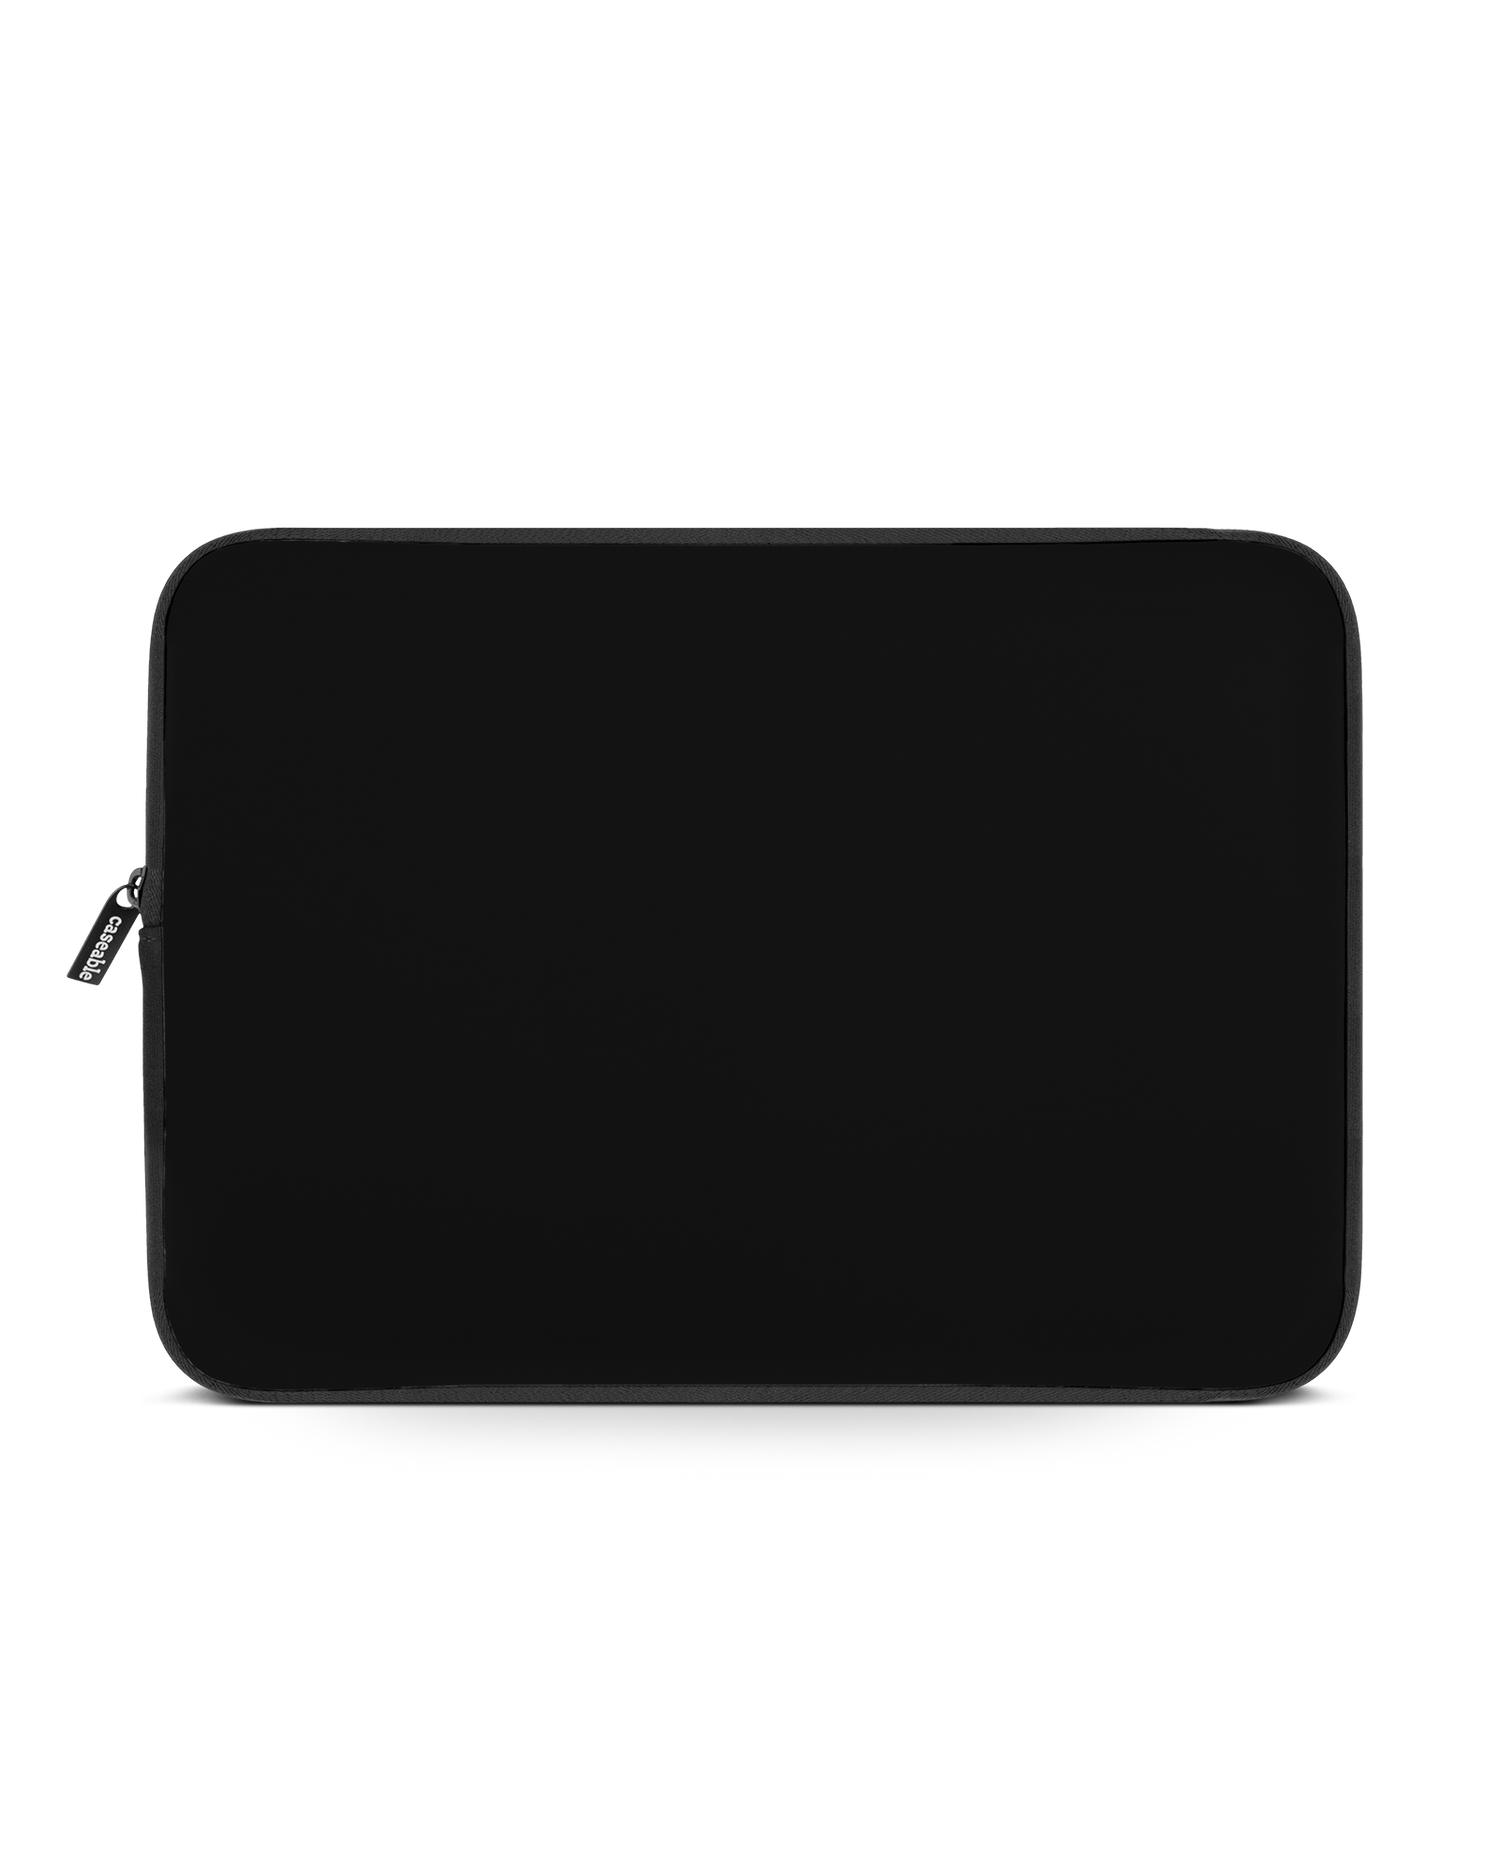 BLACK Laptop Case 14-15 inch: Front View